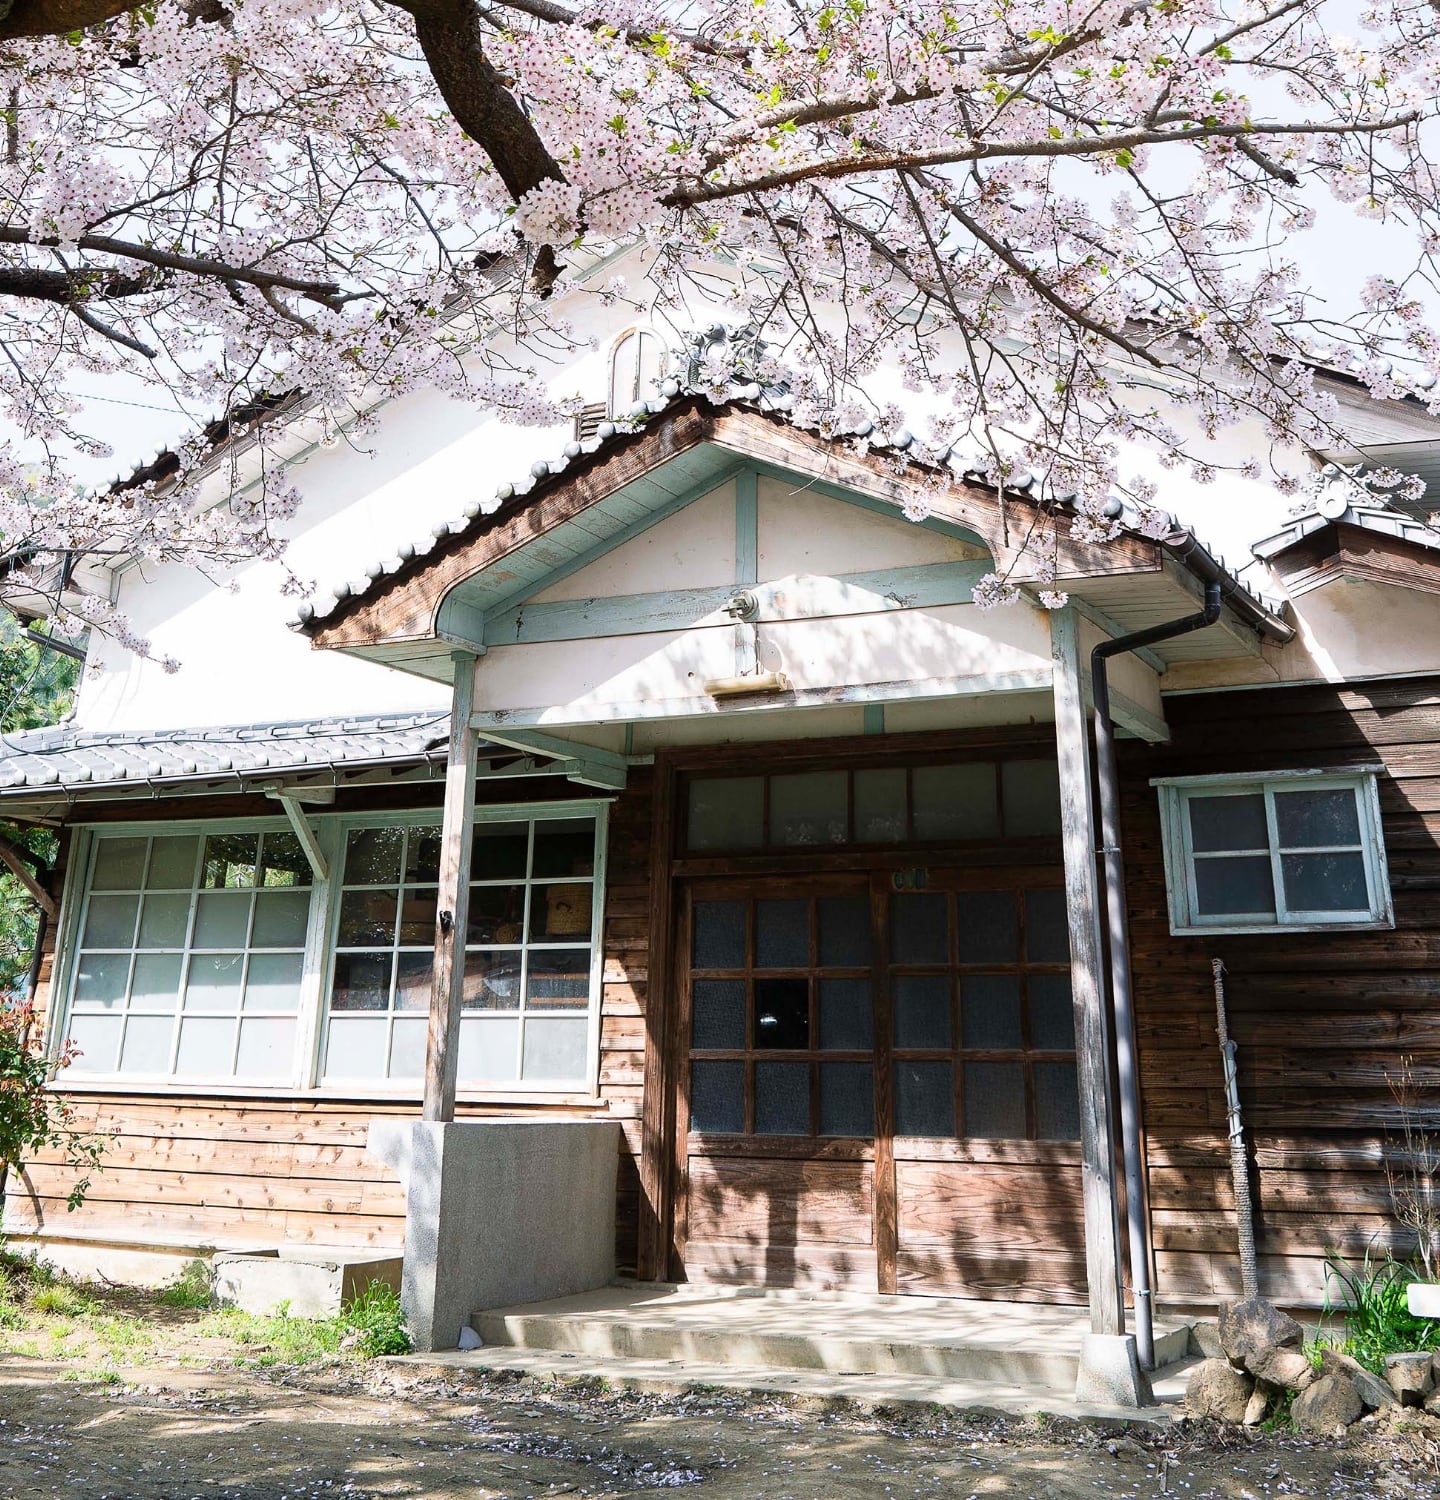 migakiba kureのイメージ写真。現地事務局・一般社団法人まめなの拠点である旧梶原医院の入り口写真です。上部には花が咲いた桜の木、木造の旧梶原医院の様子が写っています。